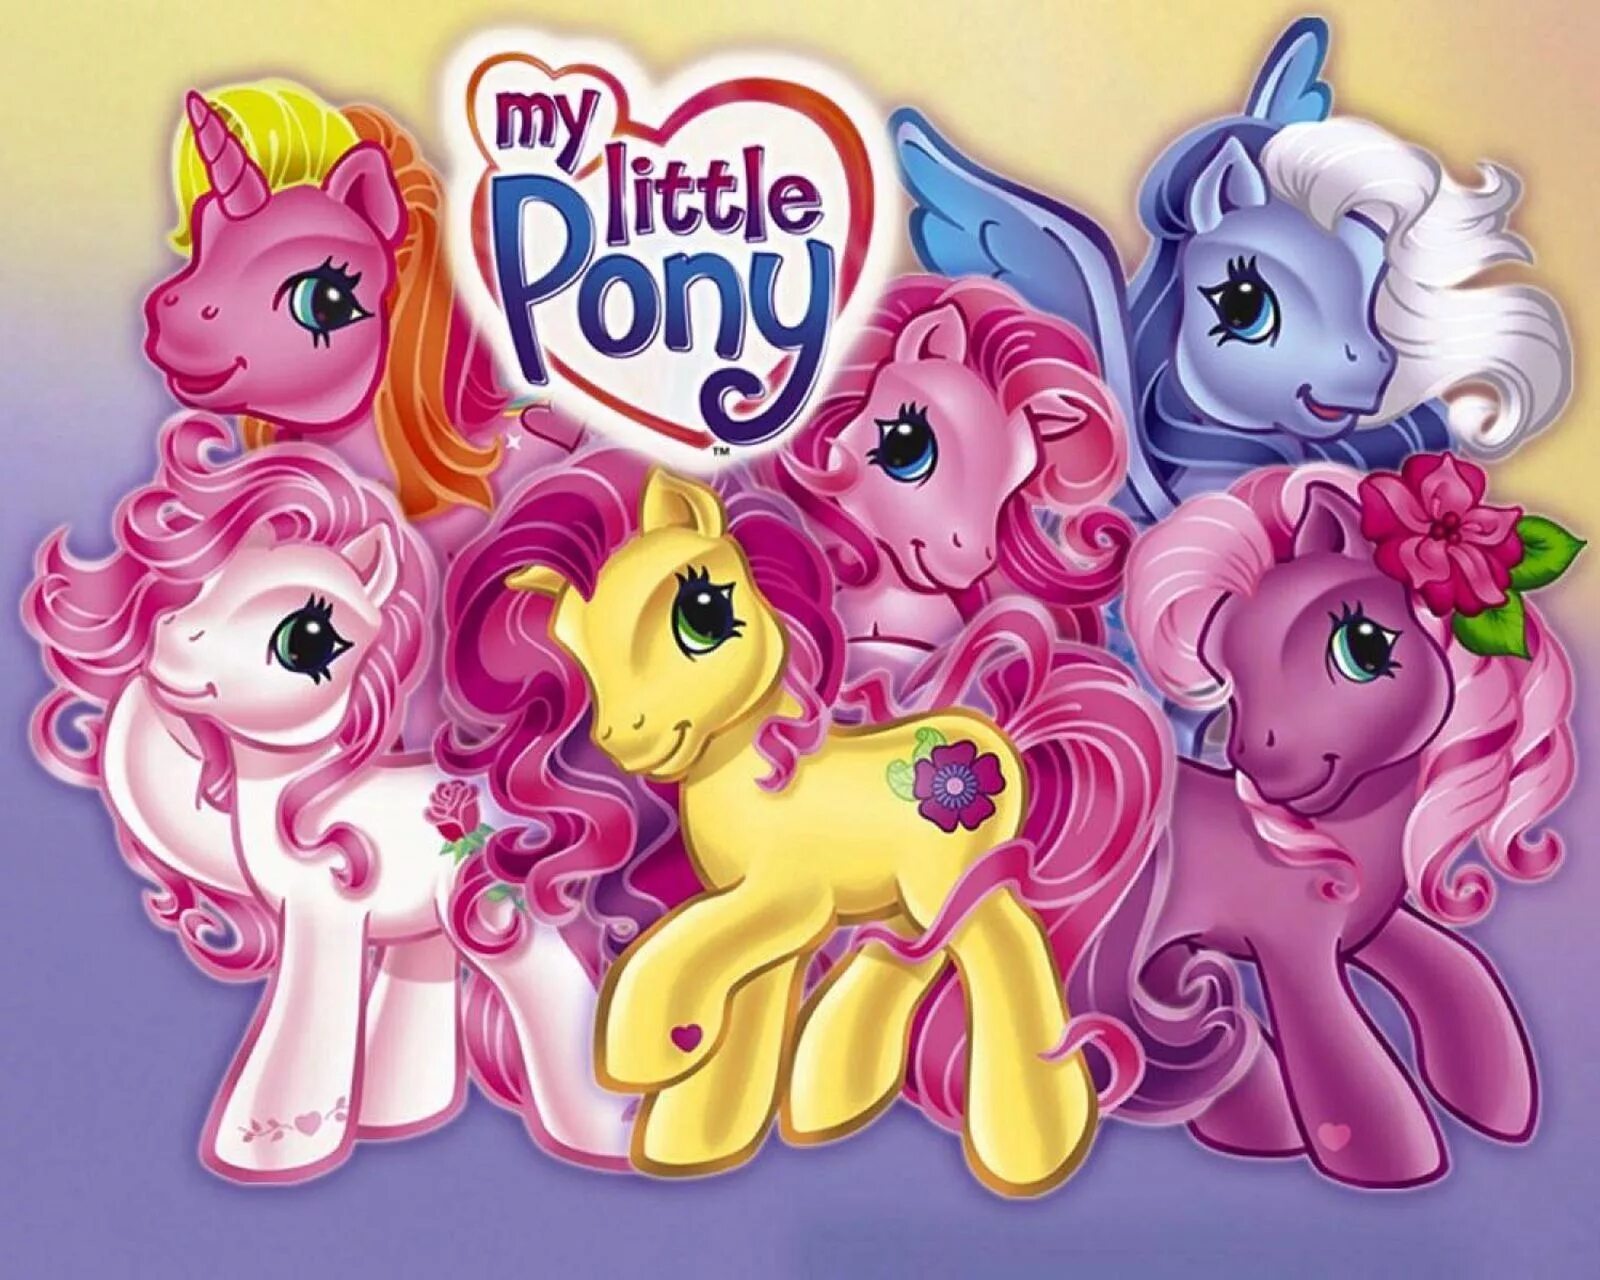 My little Pony g3. My little Pony Ponyville g3 игрушки. Mu pony